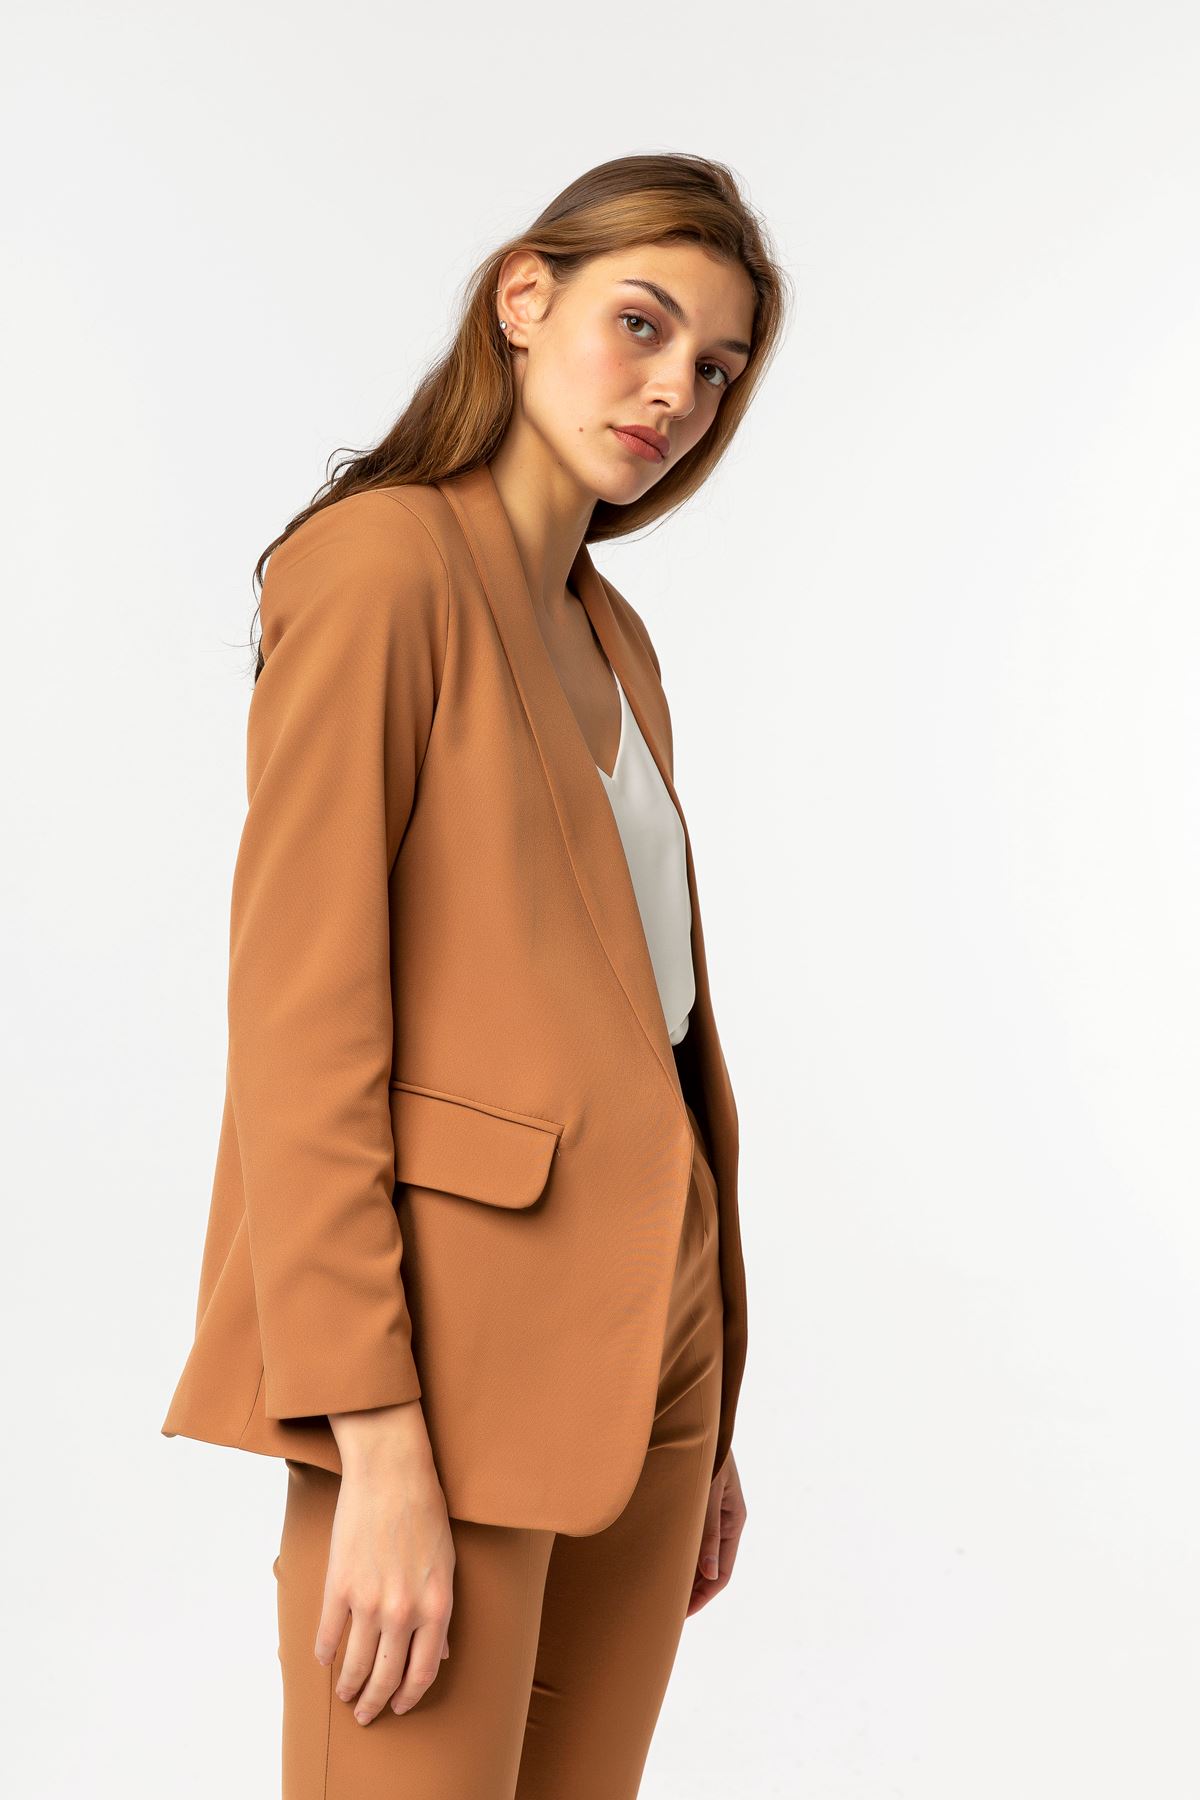 Atlas Fabric Long Sleeve Shawl Collar Below Hip Classical Women Jacket - Brown